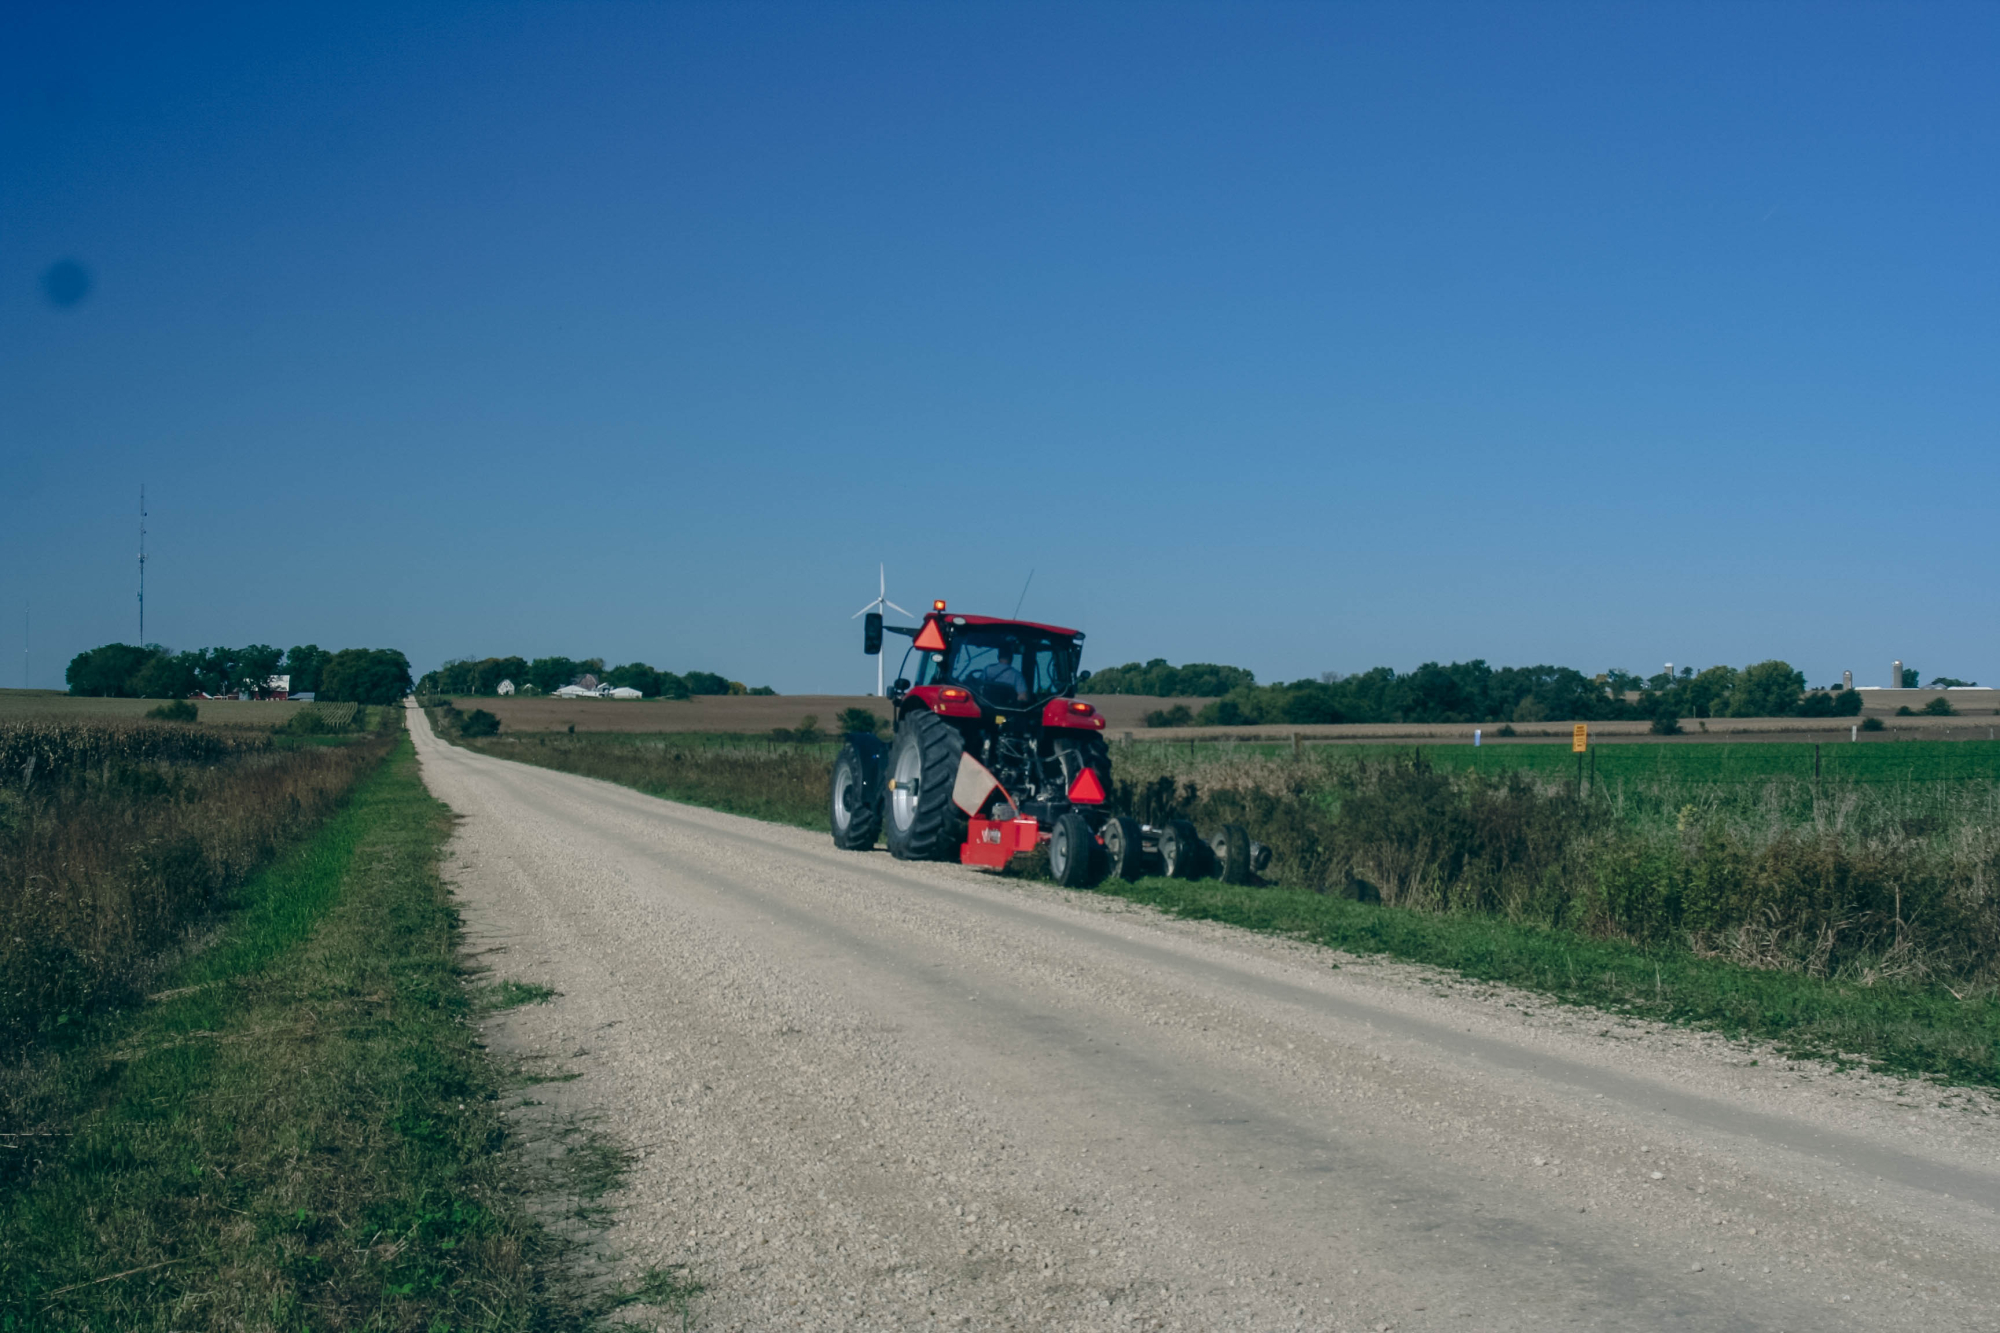 A tractor tending to roadside vegetation alongside a gravel road.